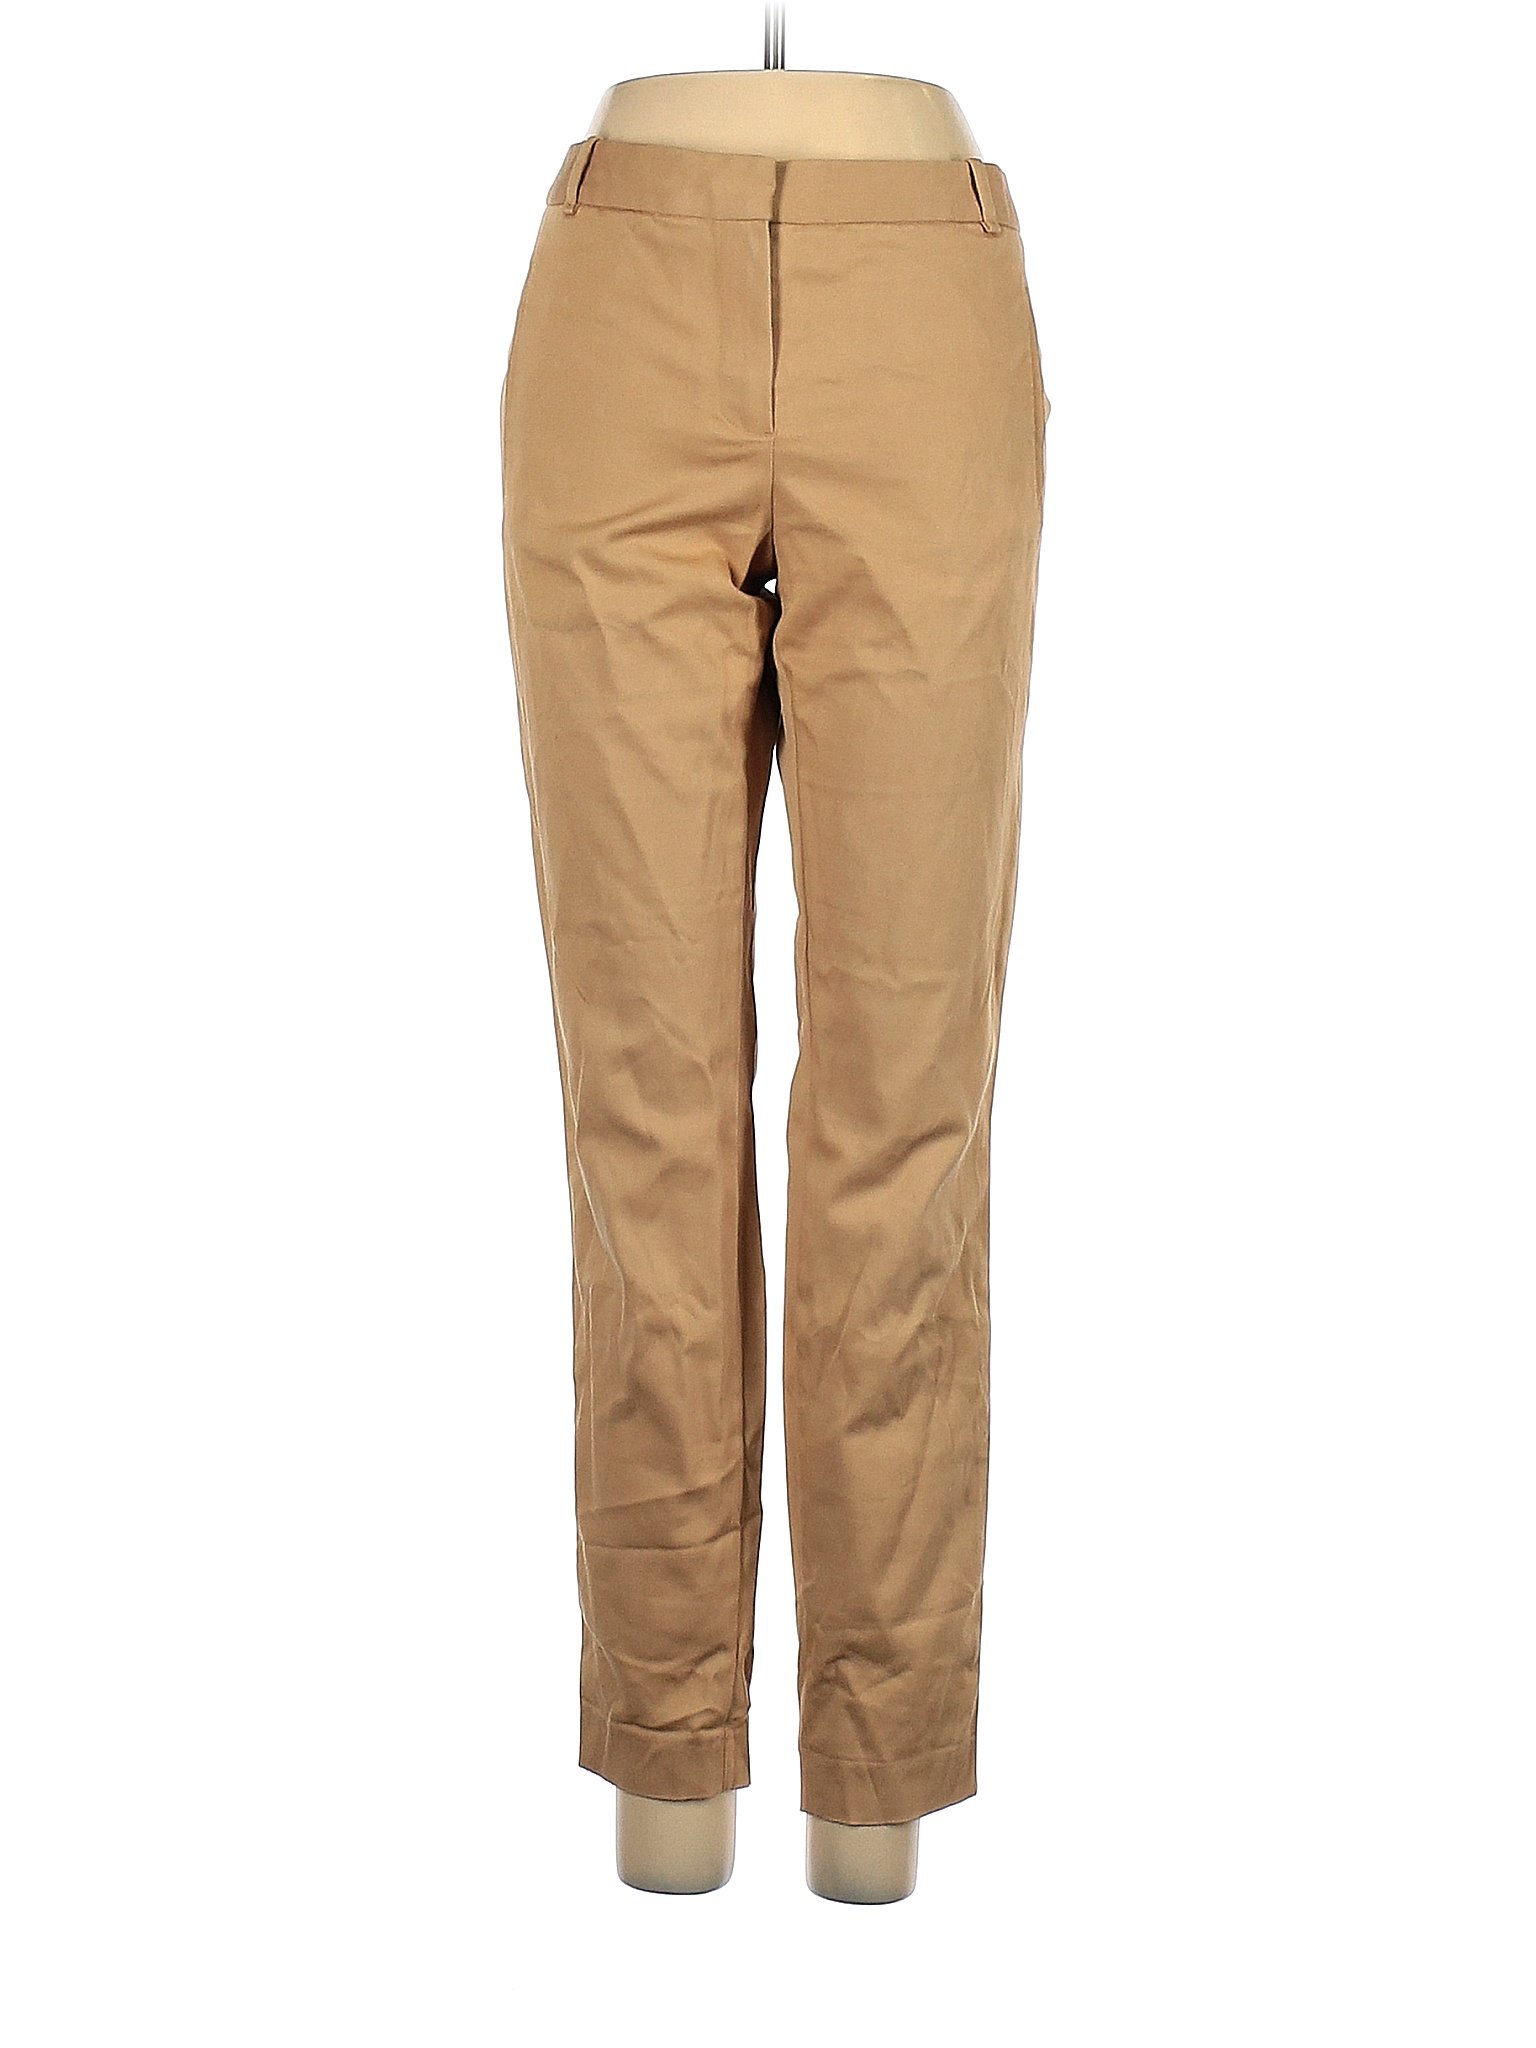 Massimo Dutti Solid Colored Tan Khakis Size 10 - 82% off | thredUP